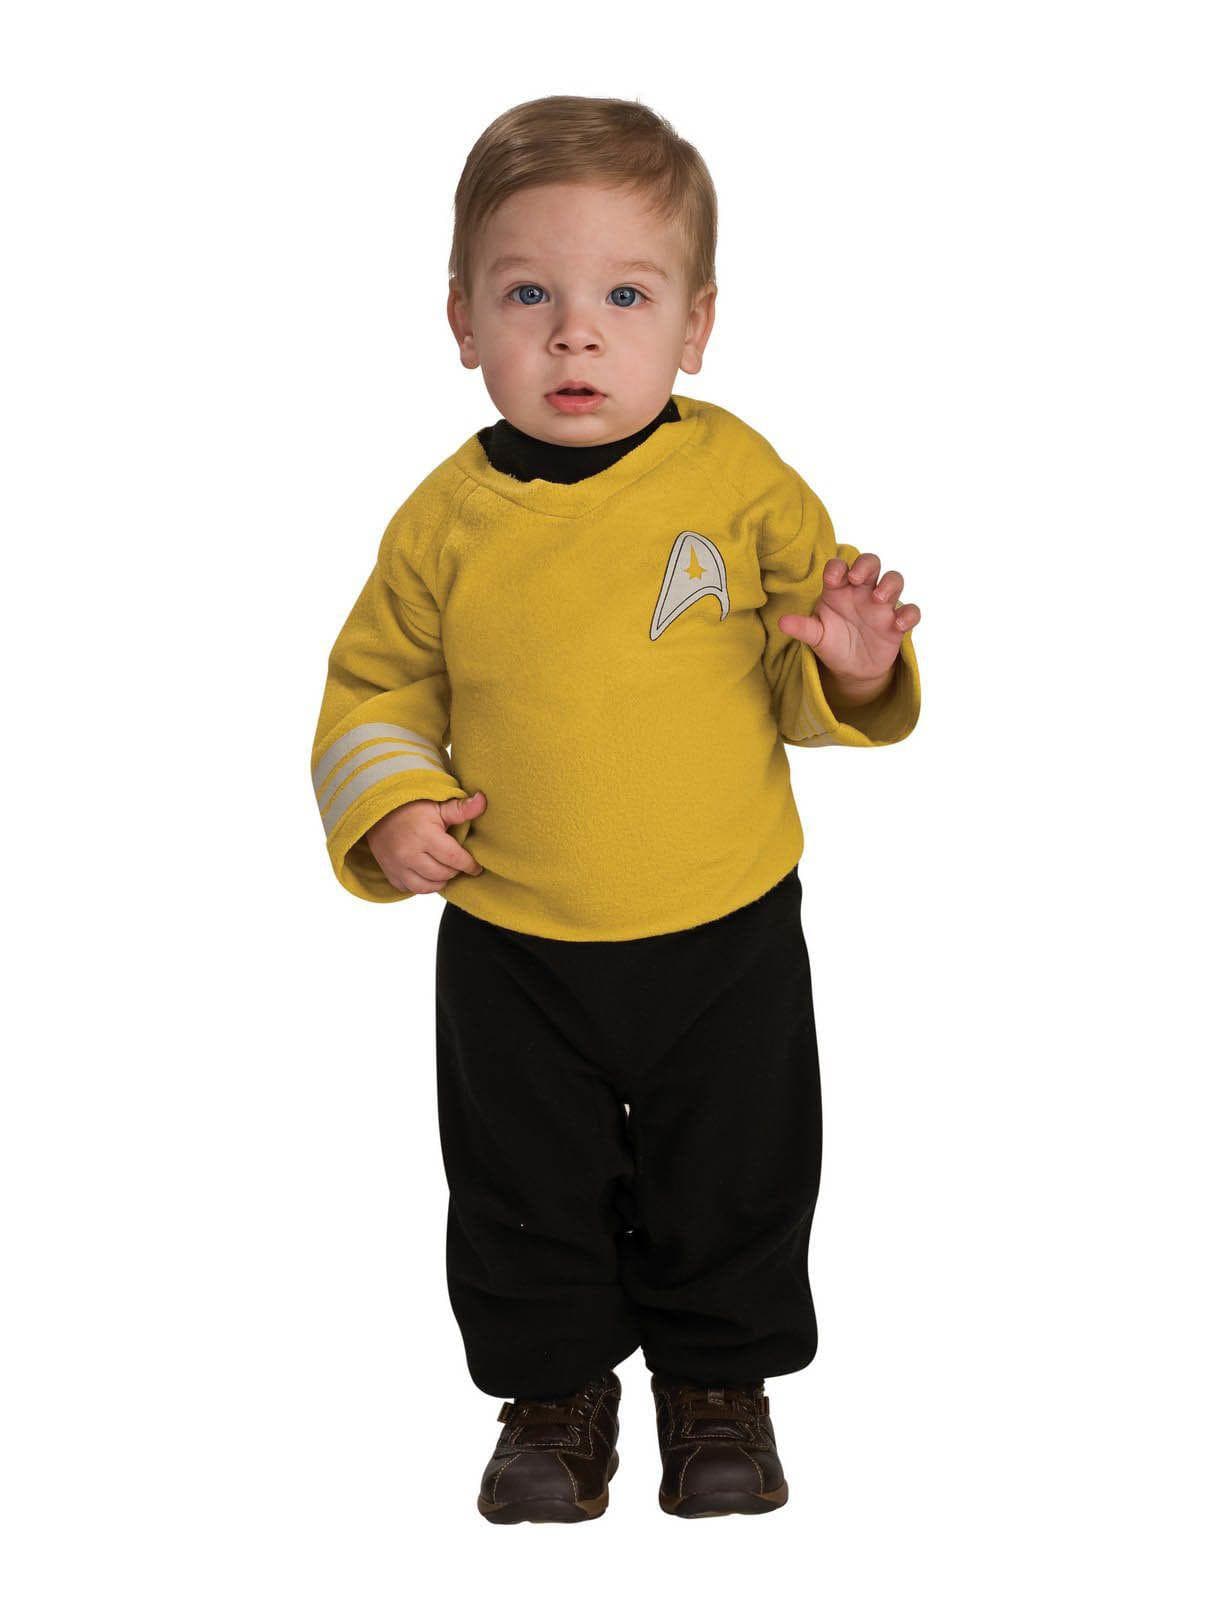 Star Trek II Captain Kirk Costume for Babies and Toddlers - costumes.com